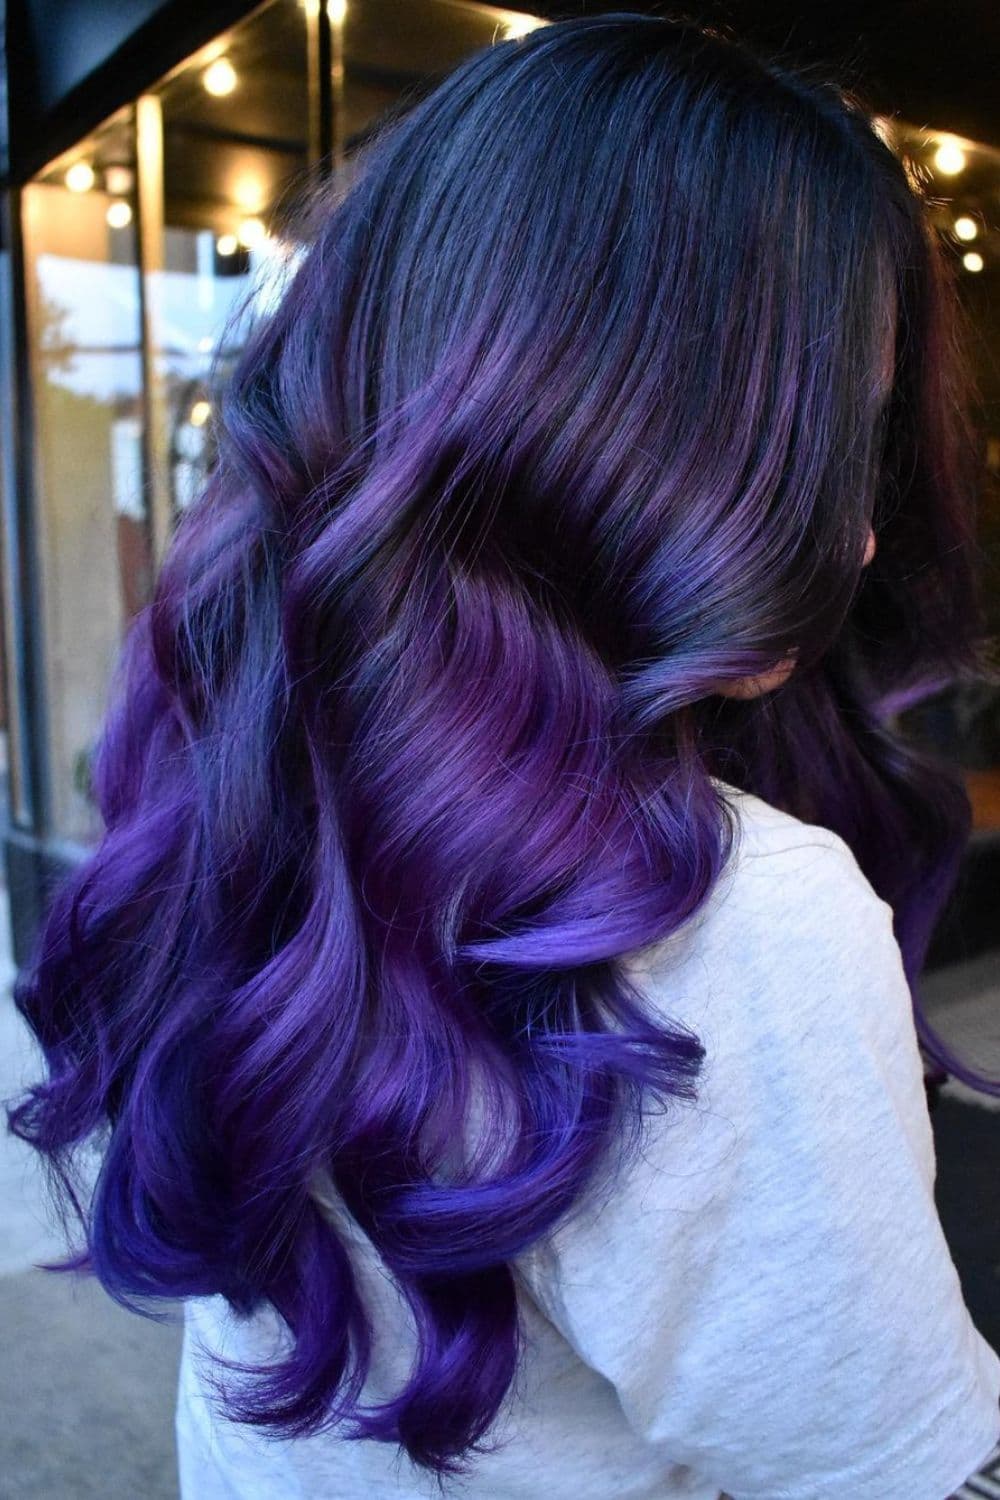 A woman with long deep purple balayage with big curls.